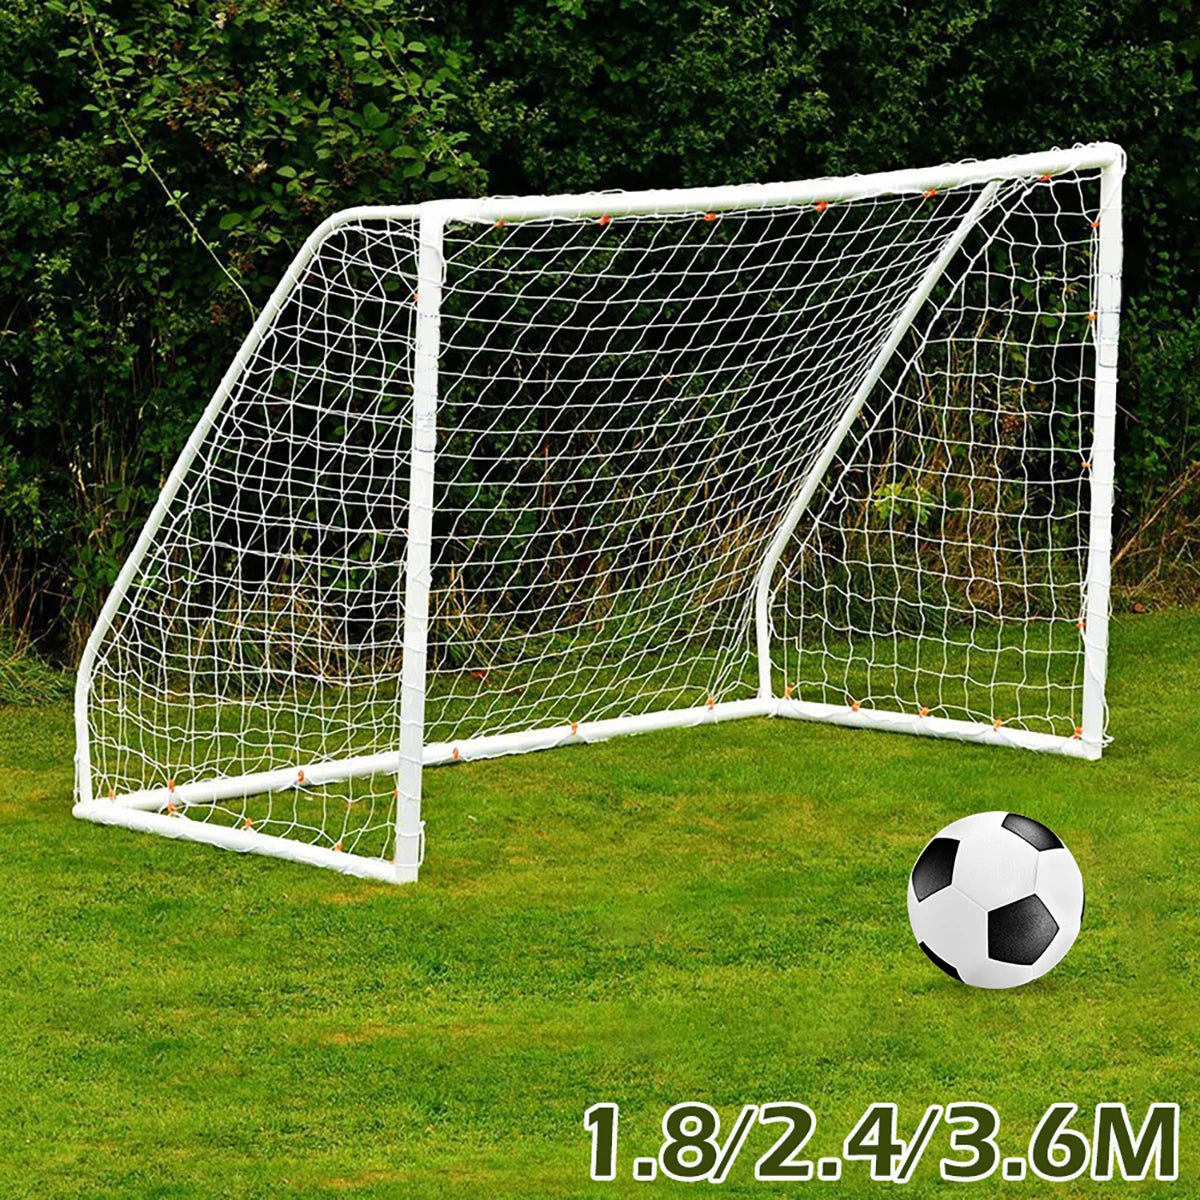 Full Size Football Net For Soccer Goal Post Junior Sports Training 1.8M X 1.2M 2.4M X 1.8M 3.6M X 1.8M Football Net High Qual